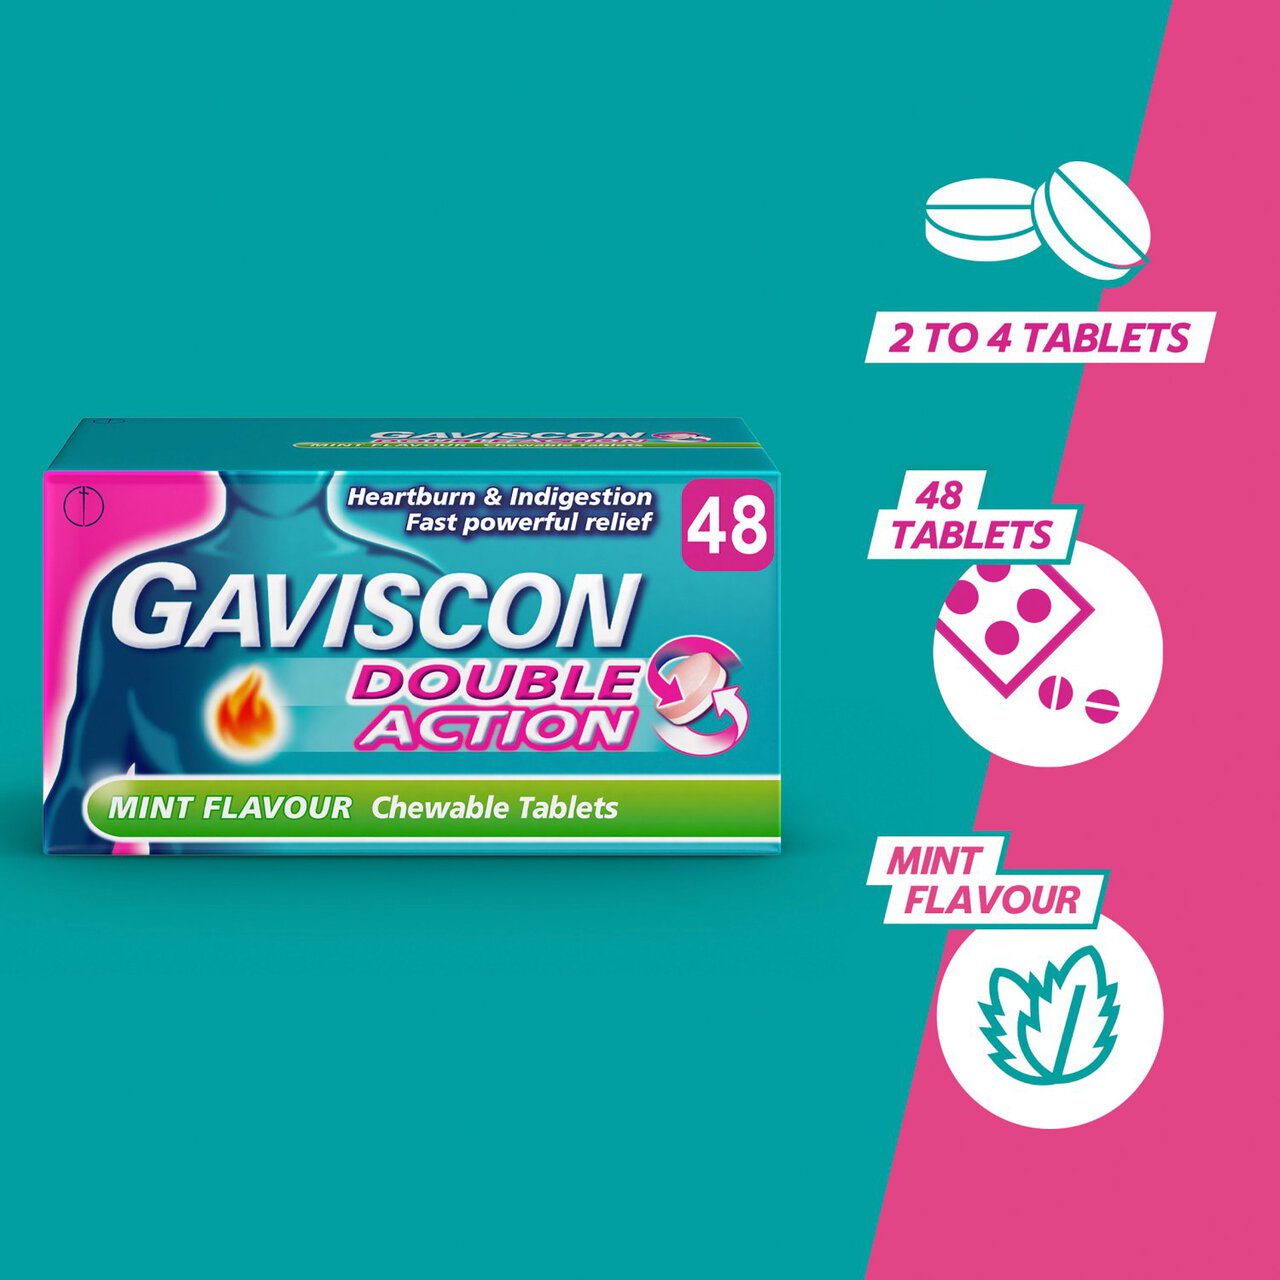 Gaviscon Double Action Heartburn & Indigestion Mint Flavour Tablets 48 per pack